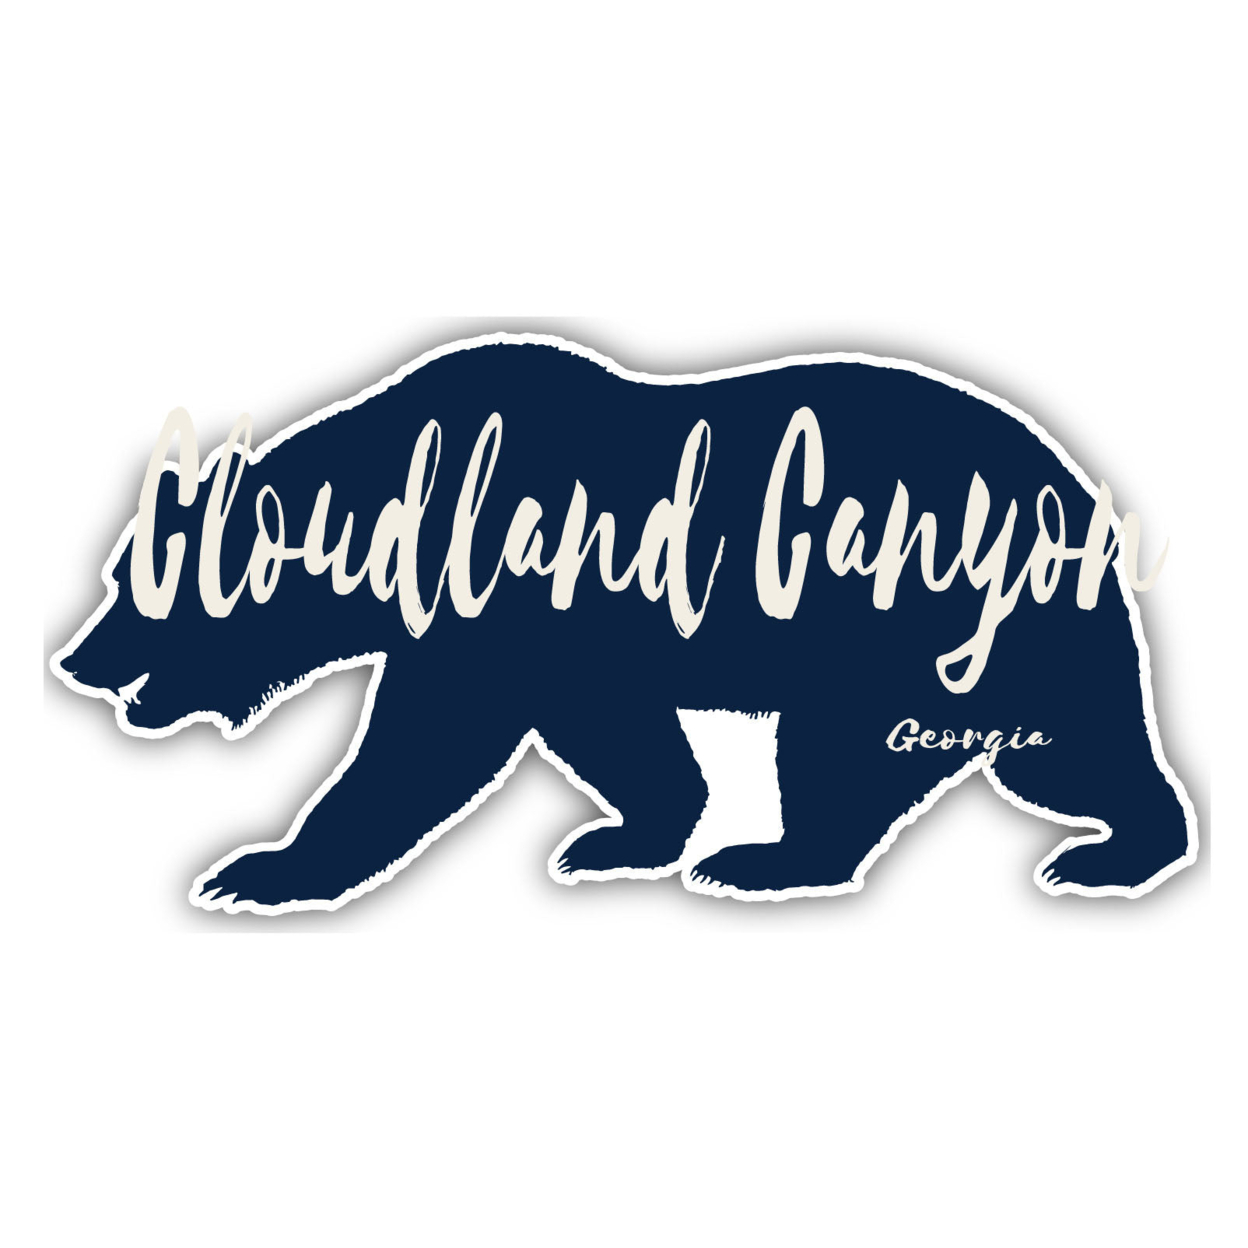 Cloudland Canyon Georgia Souvenir Decorative Stickers (Choose Theme And Size) - 4-Pack, 8-Inch, Bear